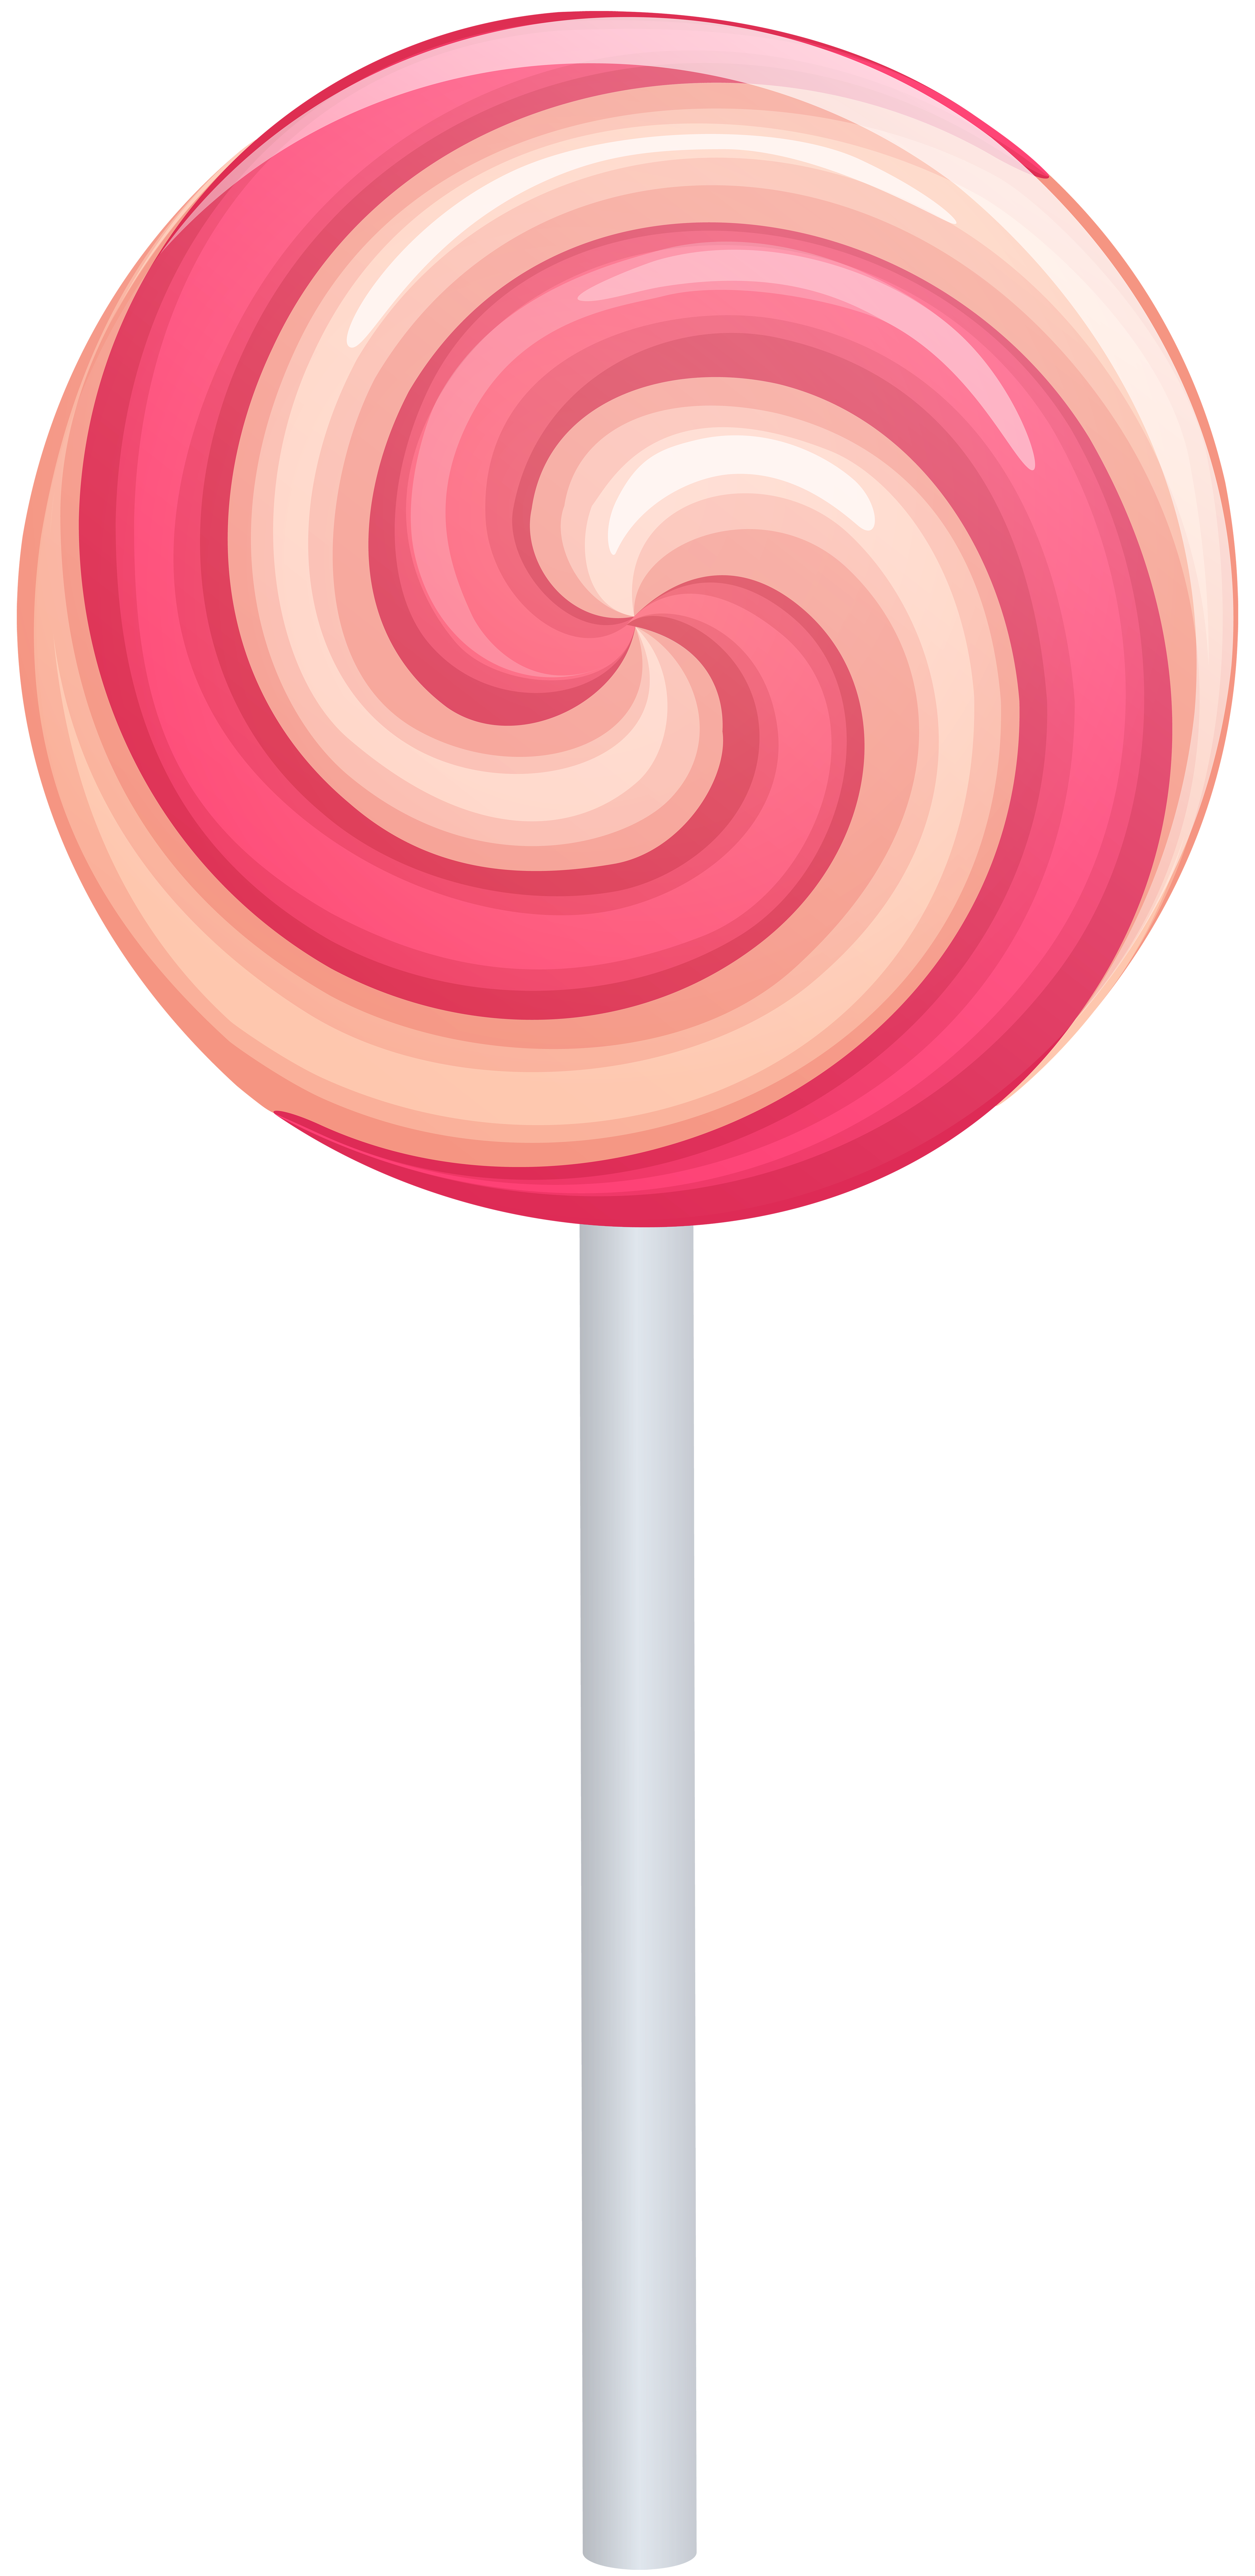 Pink Swirl Lollipop PNG Clip Art Image | Gallery Yopriceville - High